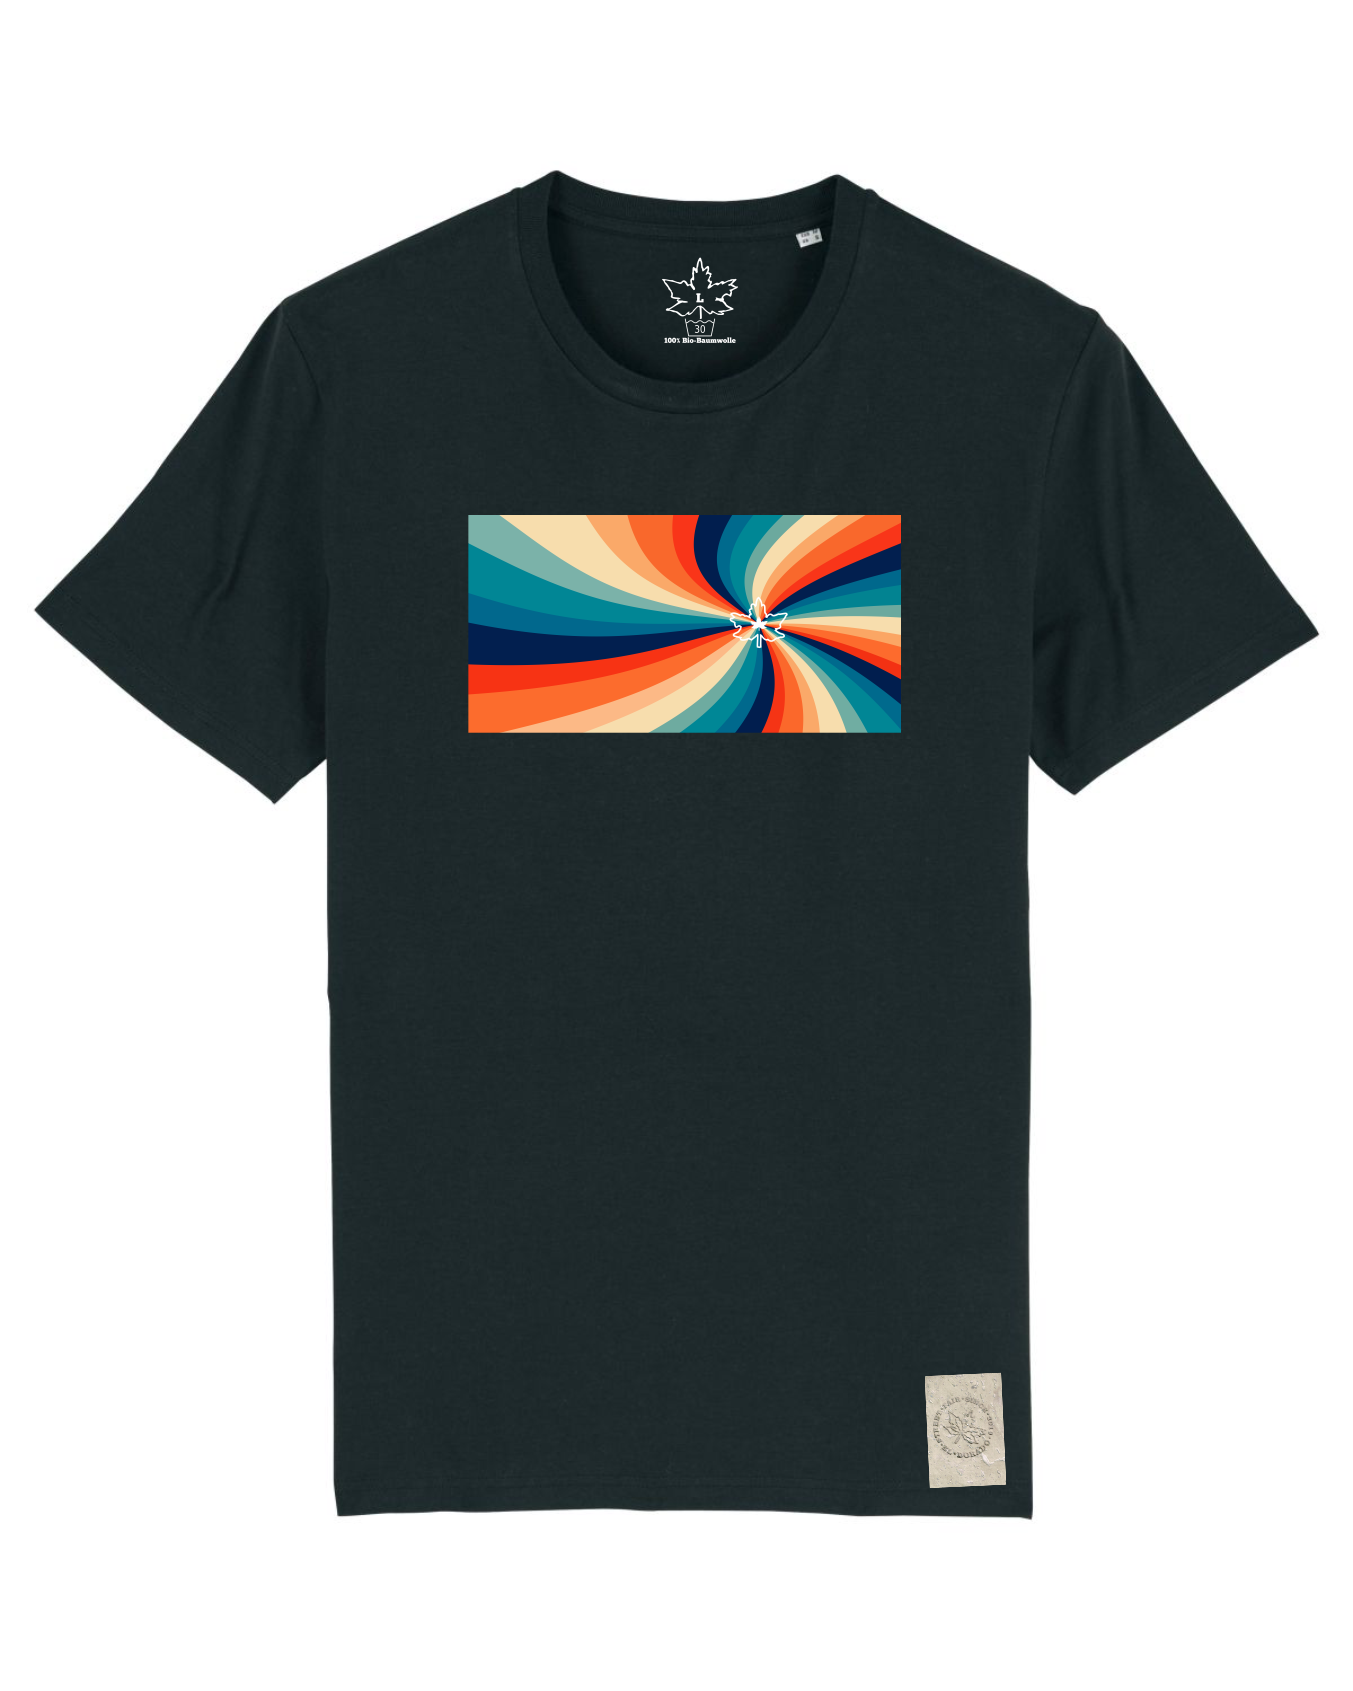 Six_Tees - Bio Herren/Unisex Shirt